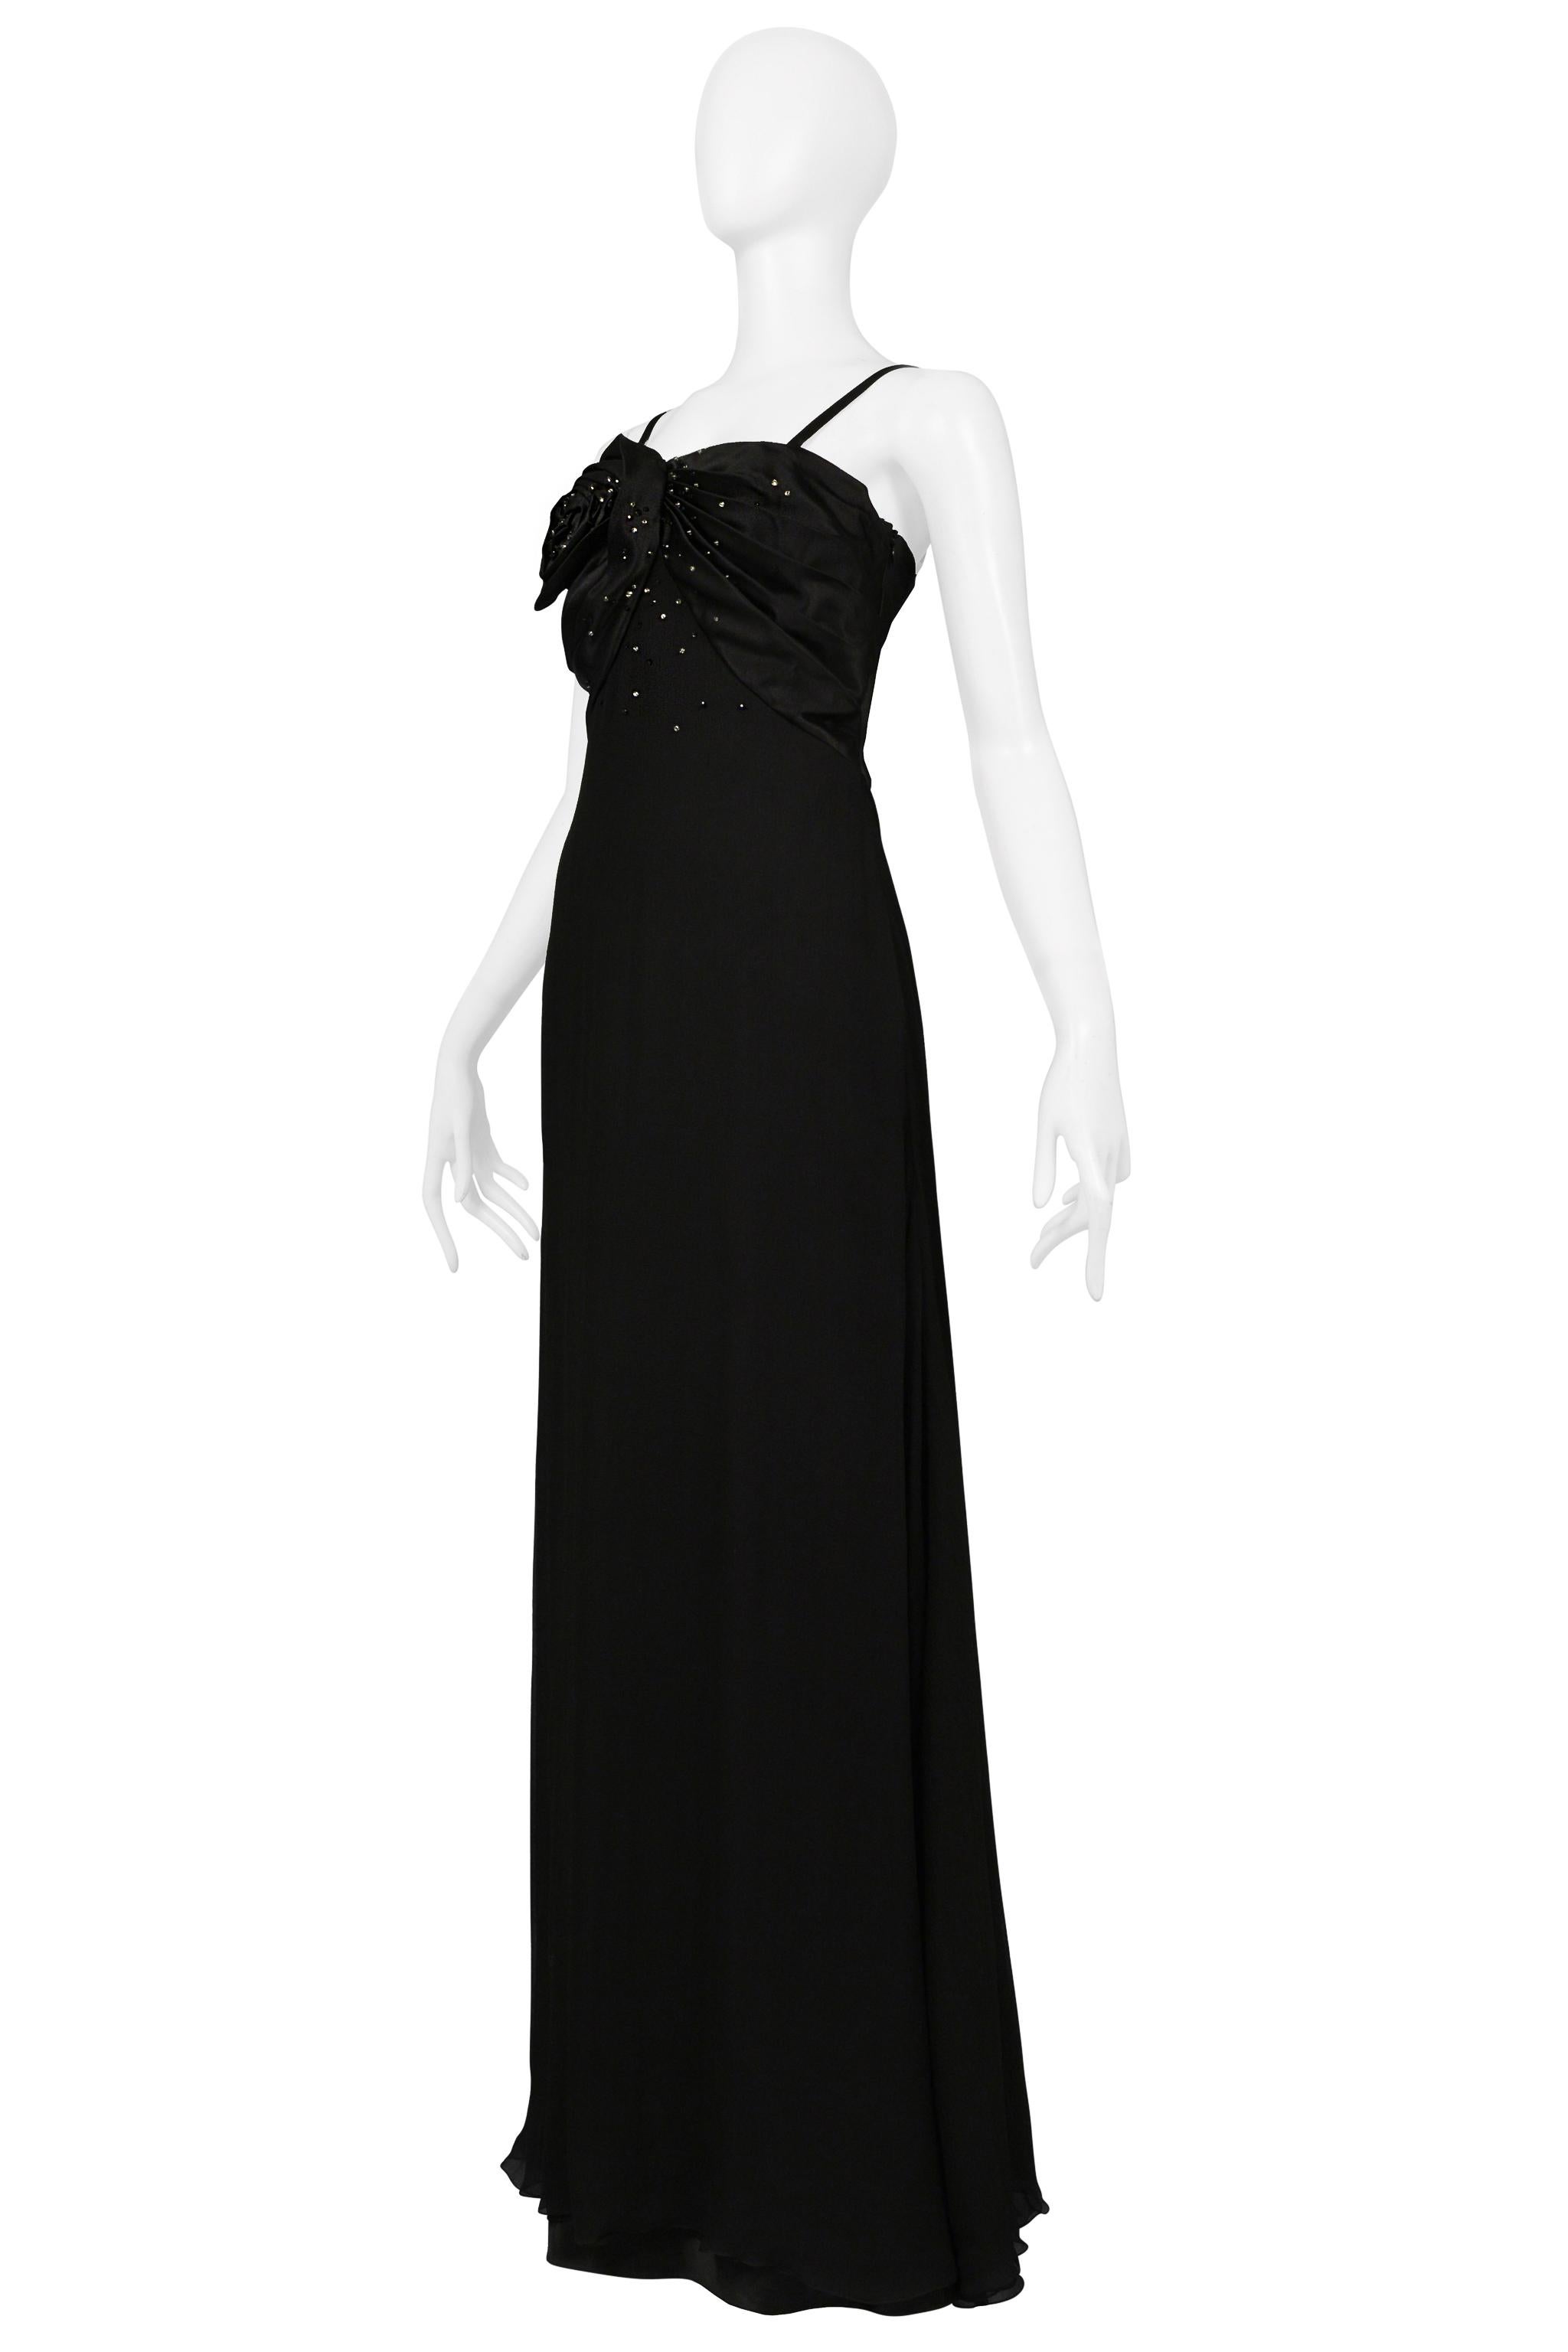 Christian Dior By John Galliano - Robe noire avec rosettes et strass, 2008 Pour femmes en vente